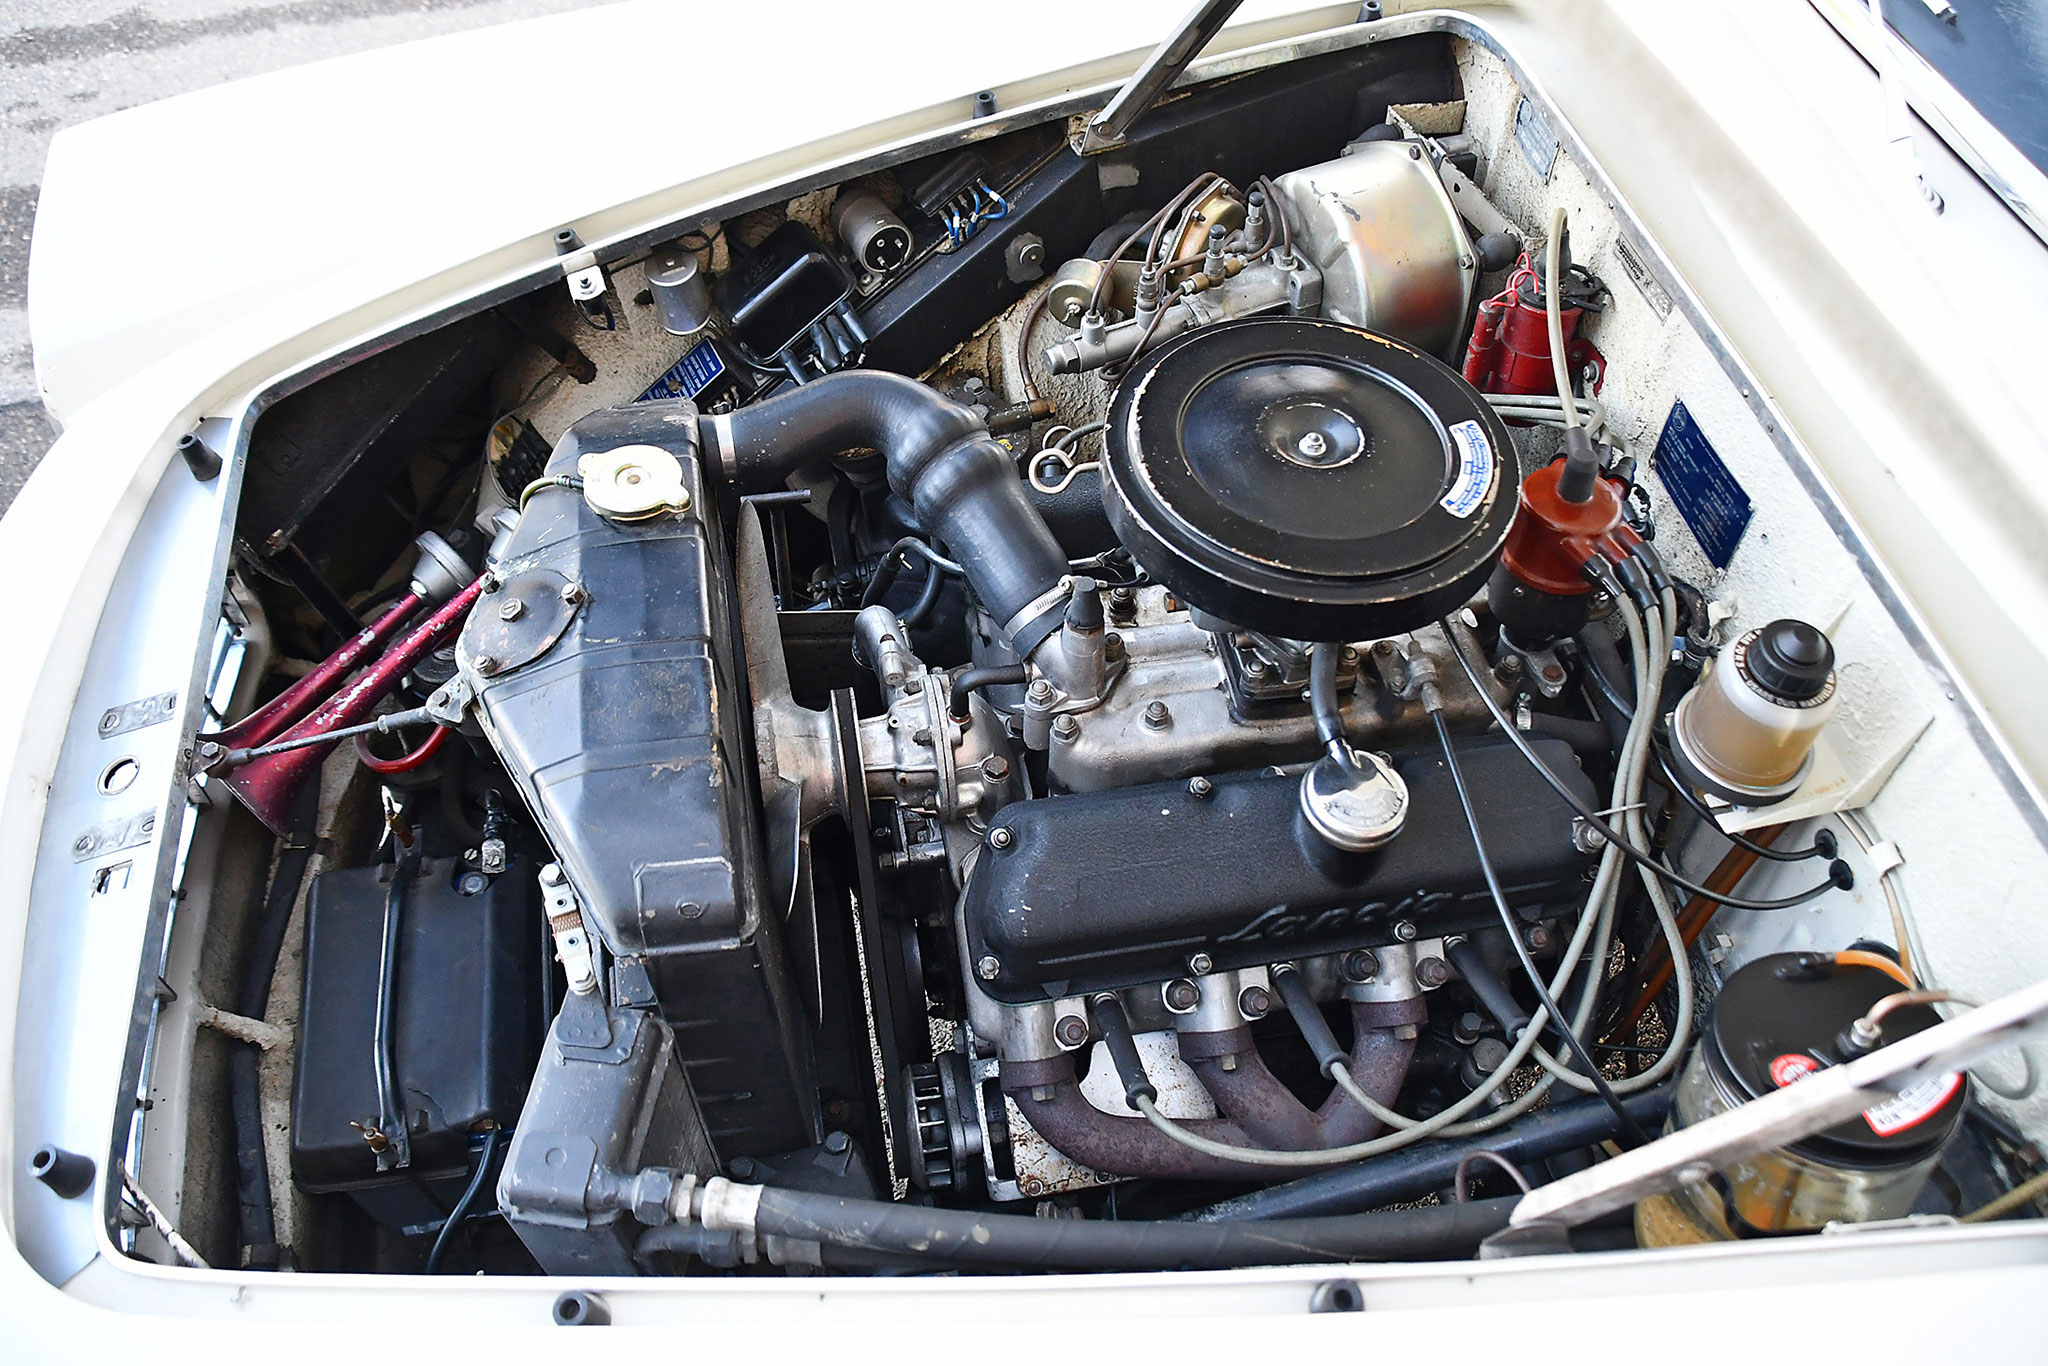 1961 Lancia Flaminia 2500 GT Touring moteur V6 de 2458 cm3 développant 112 chevaux.